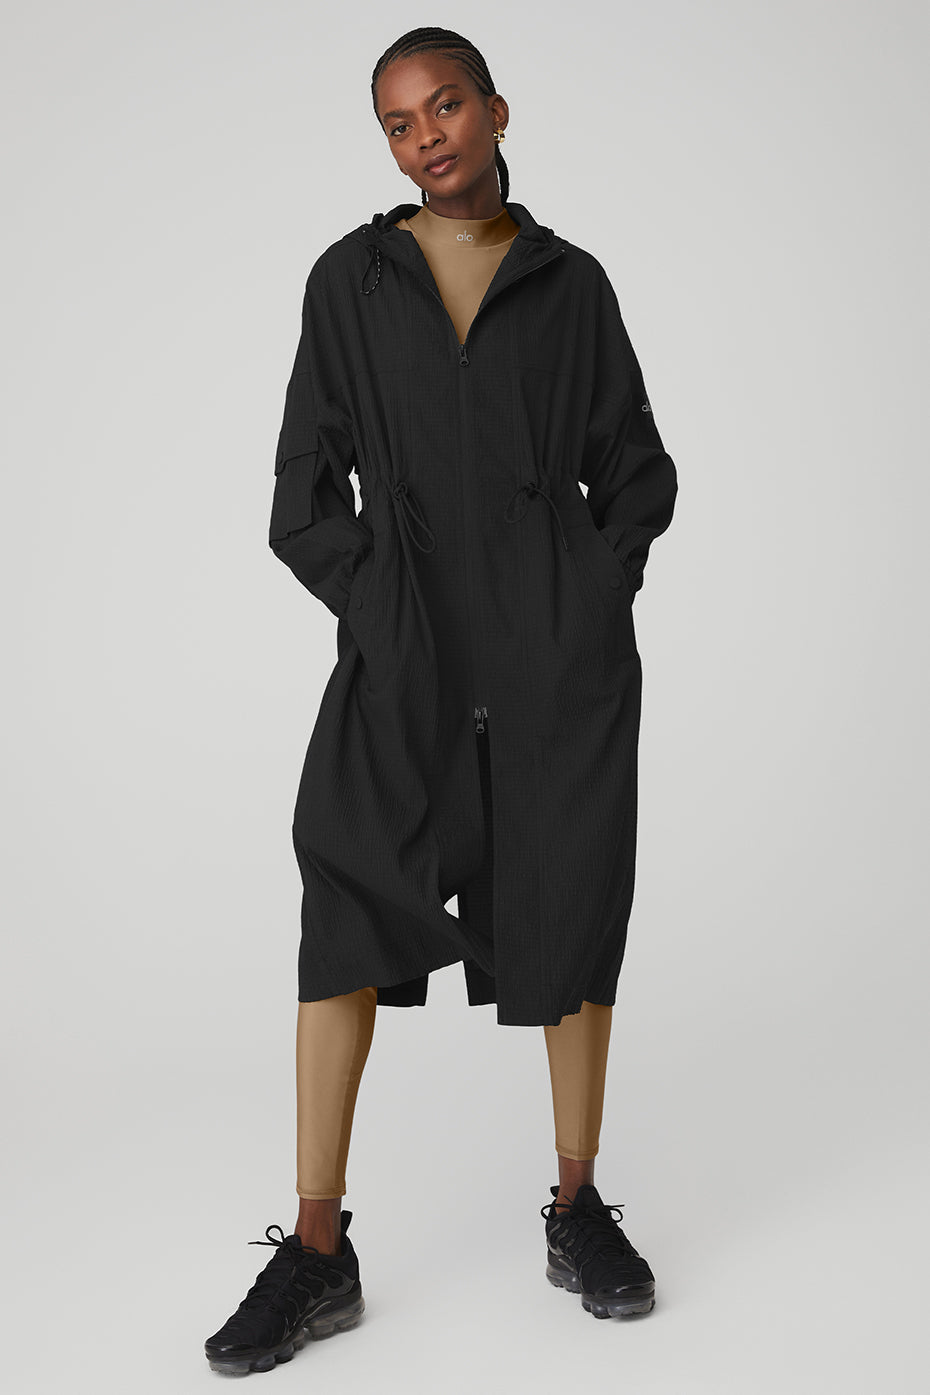 Summer Nights Lightweight Coat in Black by Alo Yoga